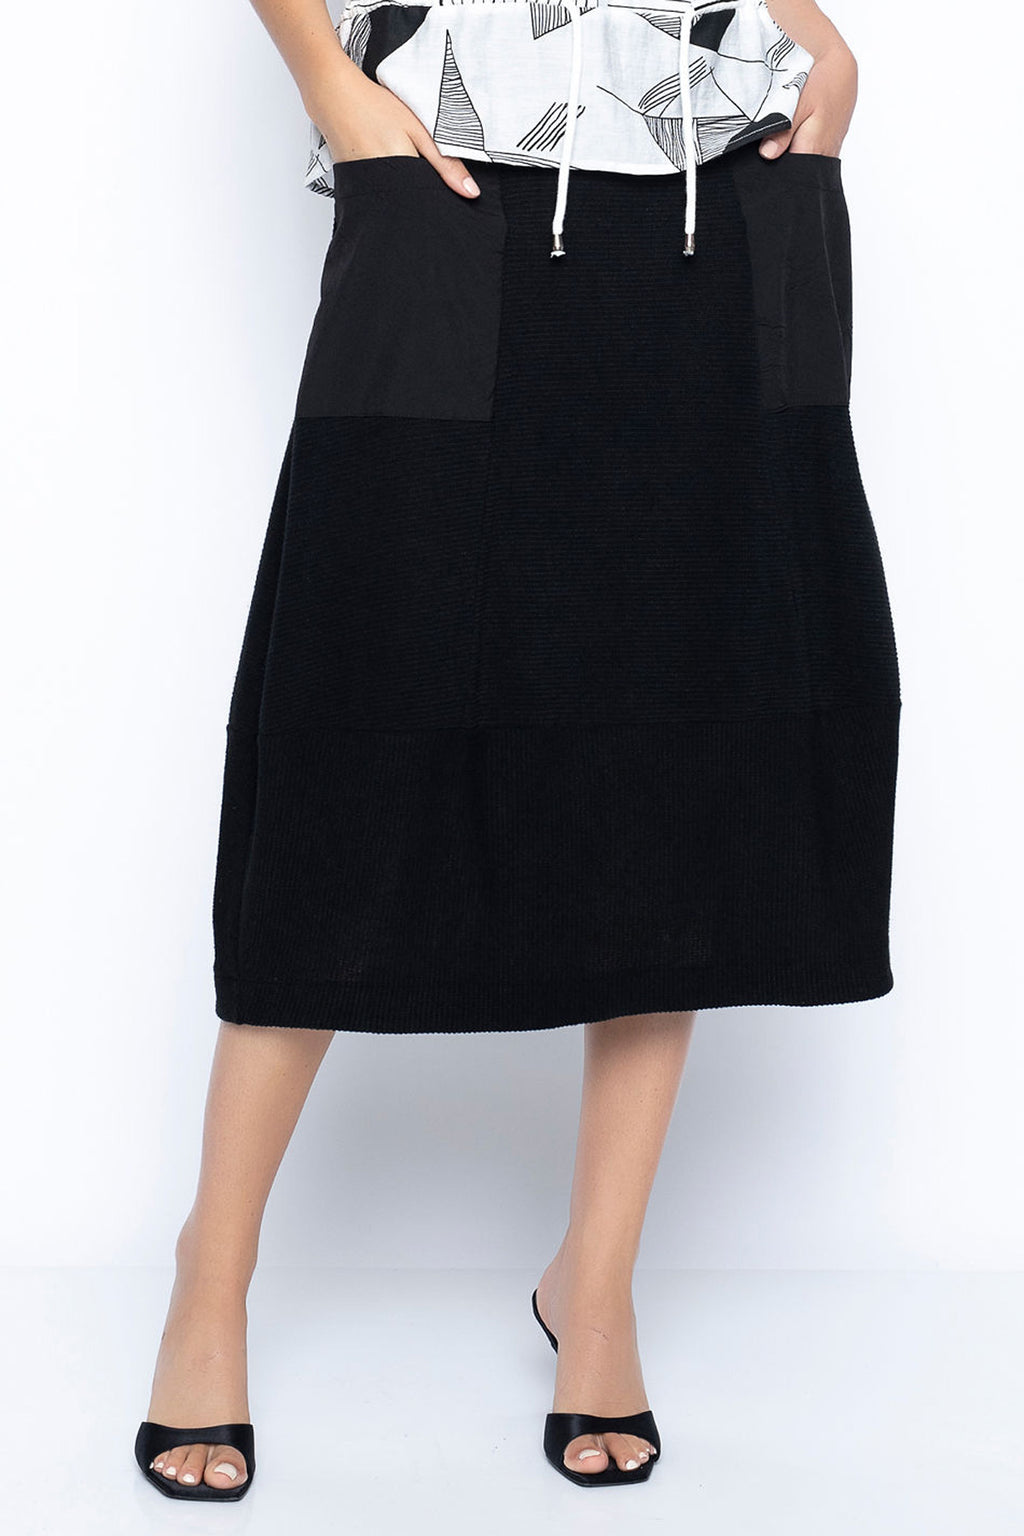 Gr. XS XXL Black Balloon Skirt Desired Size Jersey Women's Skirt With  Pockets -  Canada